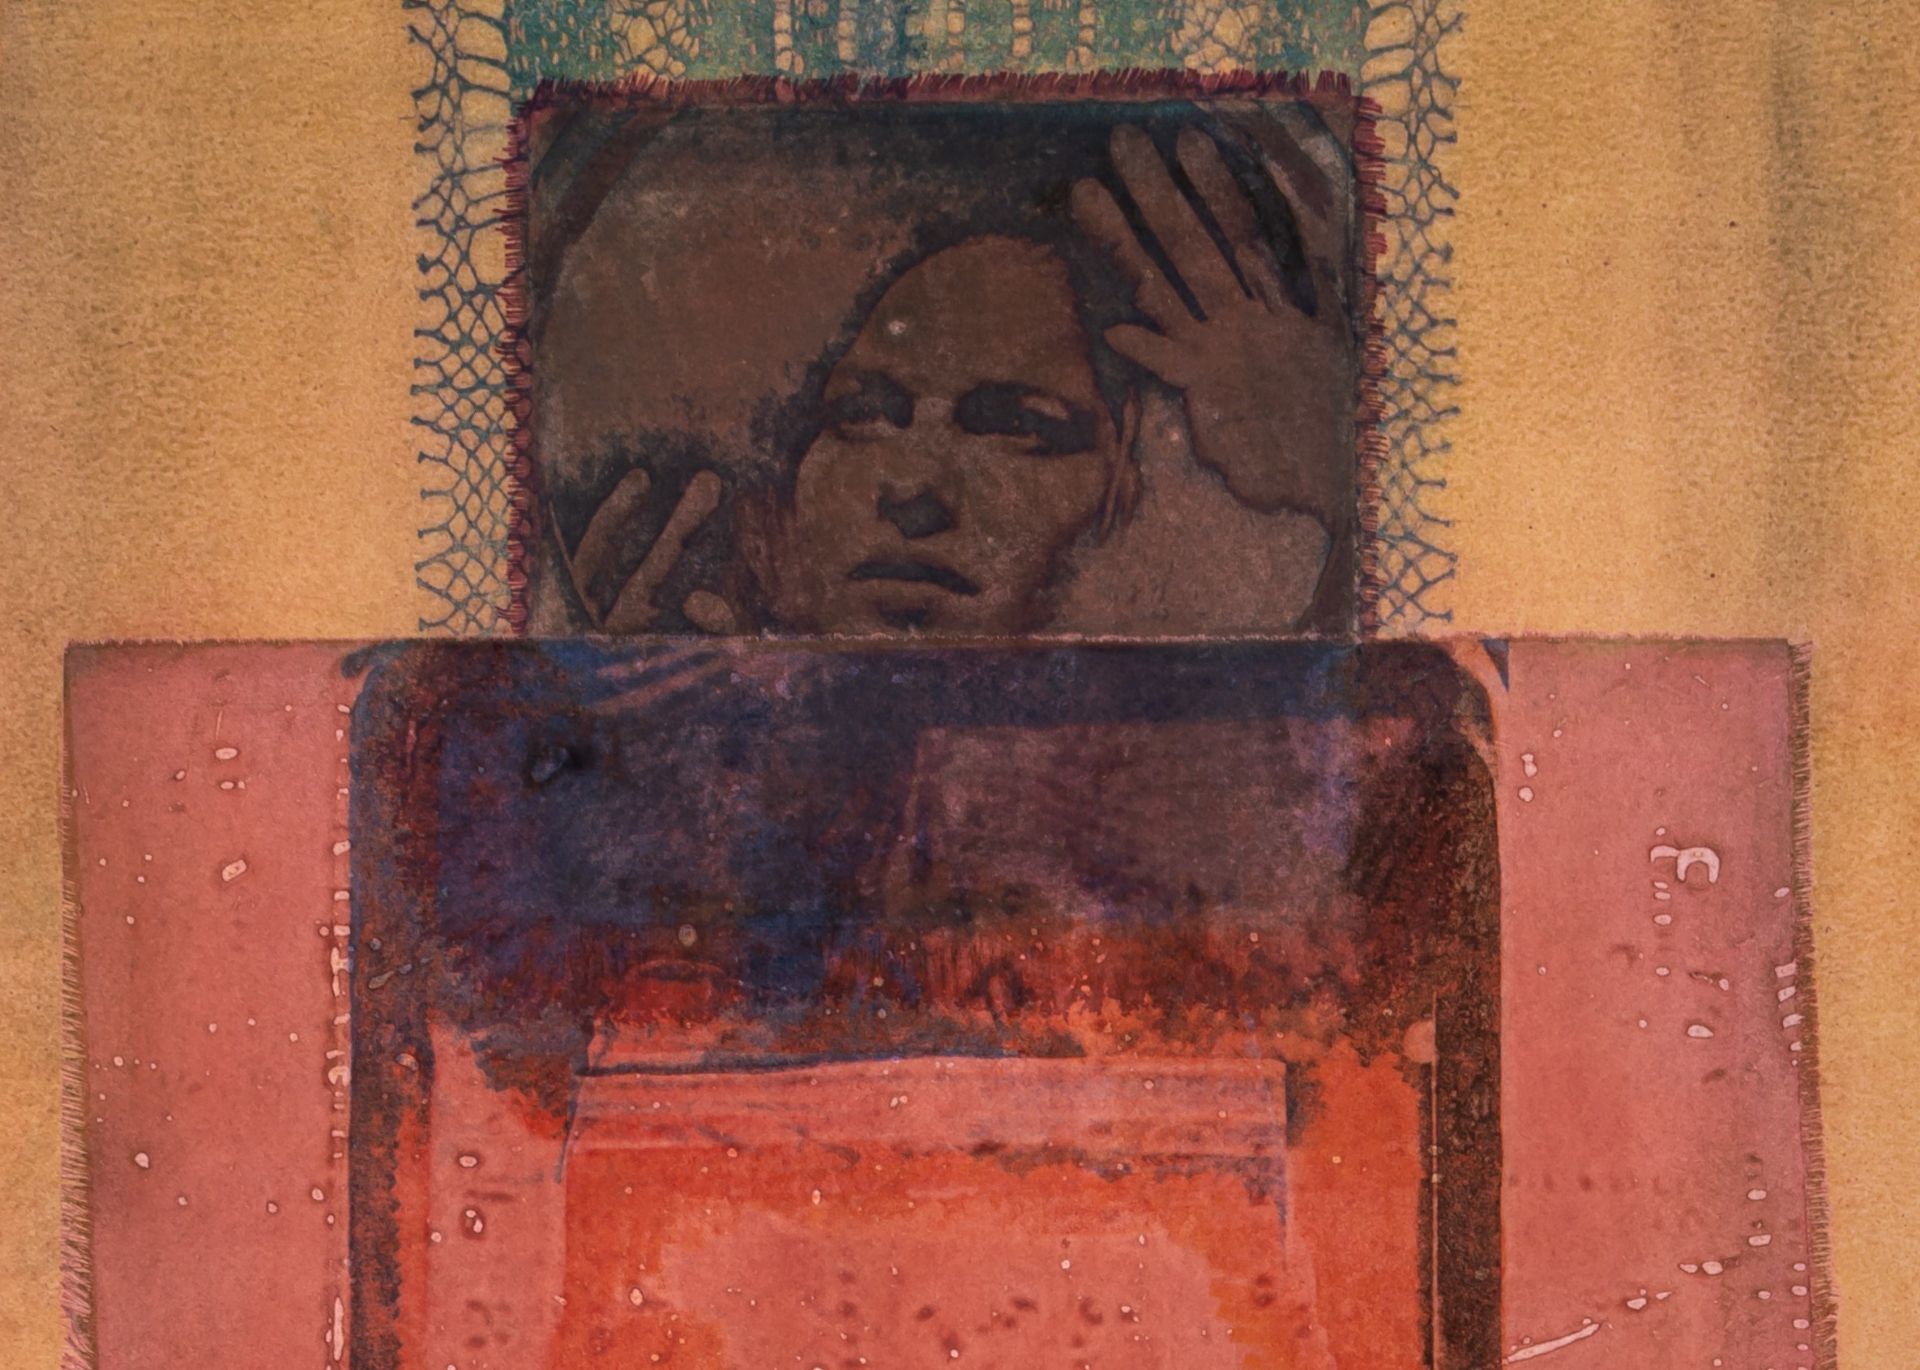 Pol Mara (1920-1998), 'To Ravel out.../ Effilochage', watercolour on paper, 1996, 88 x 125 cm - Bild 6 aus 6